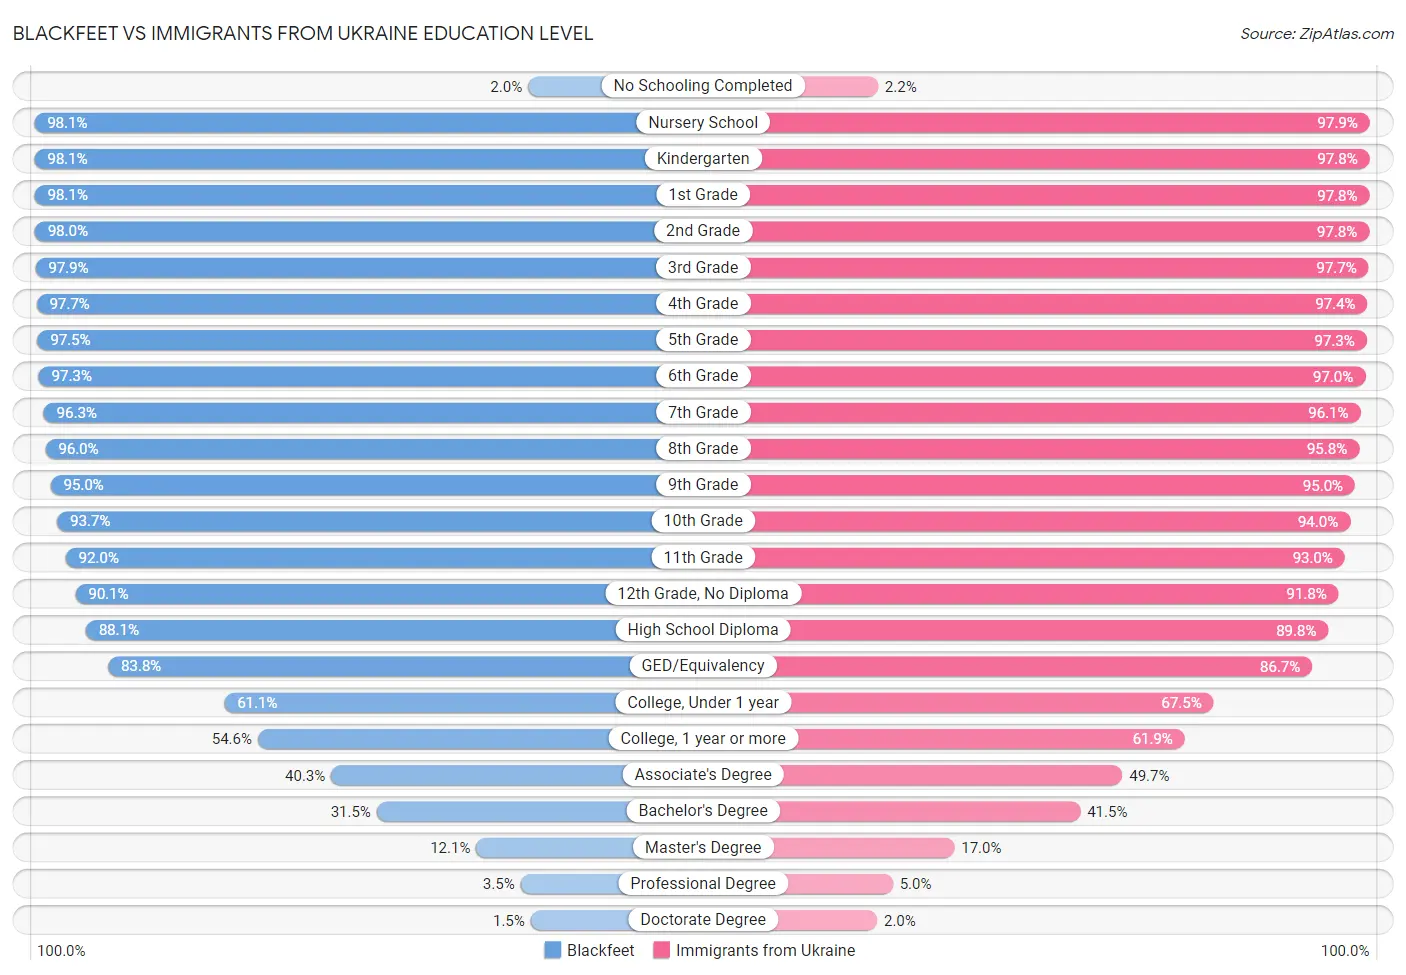 Blackfeet vs Immigrants from Ukraine Education Level